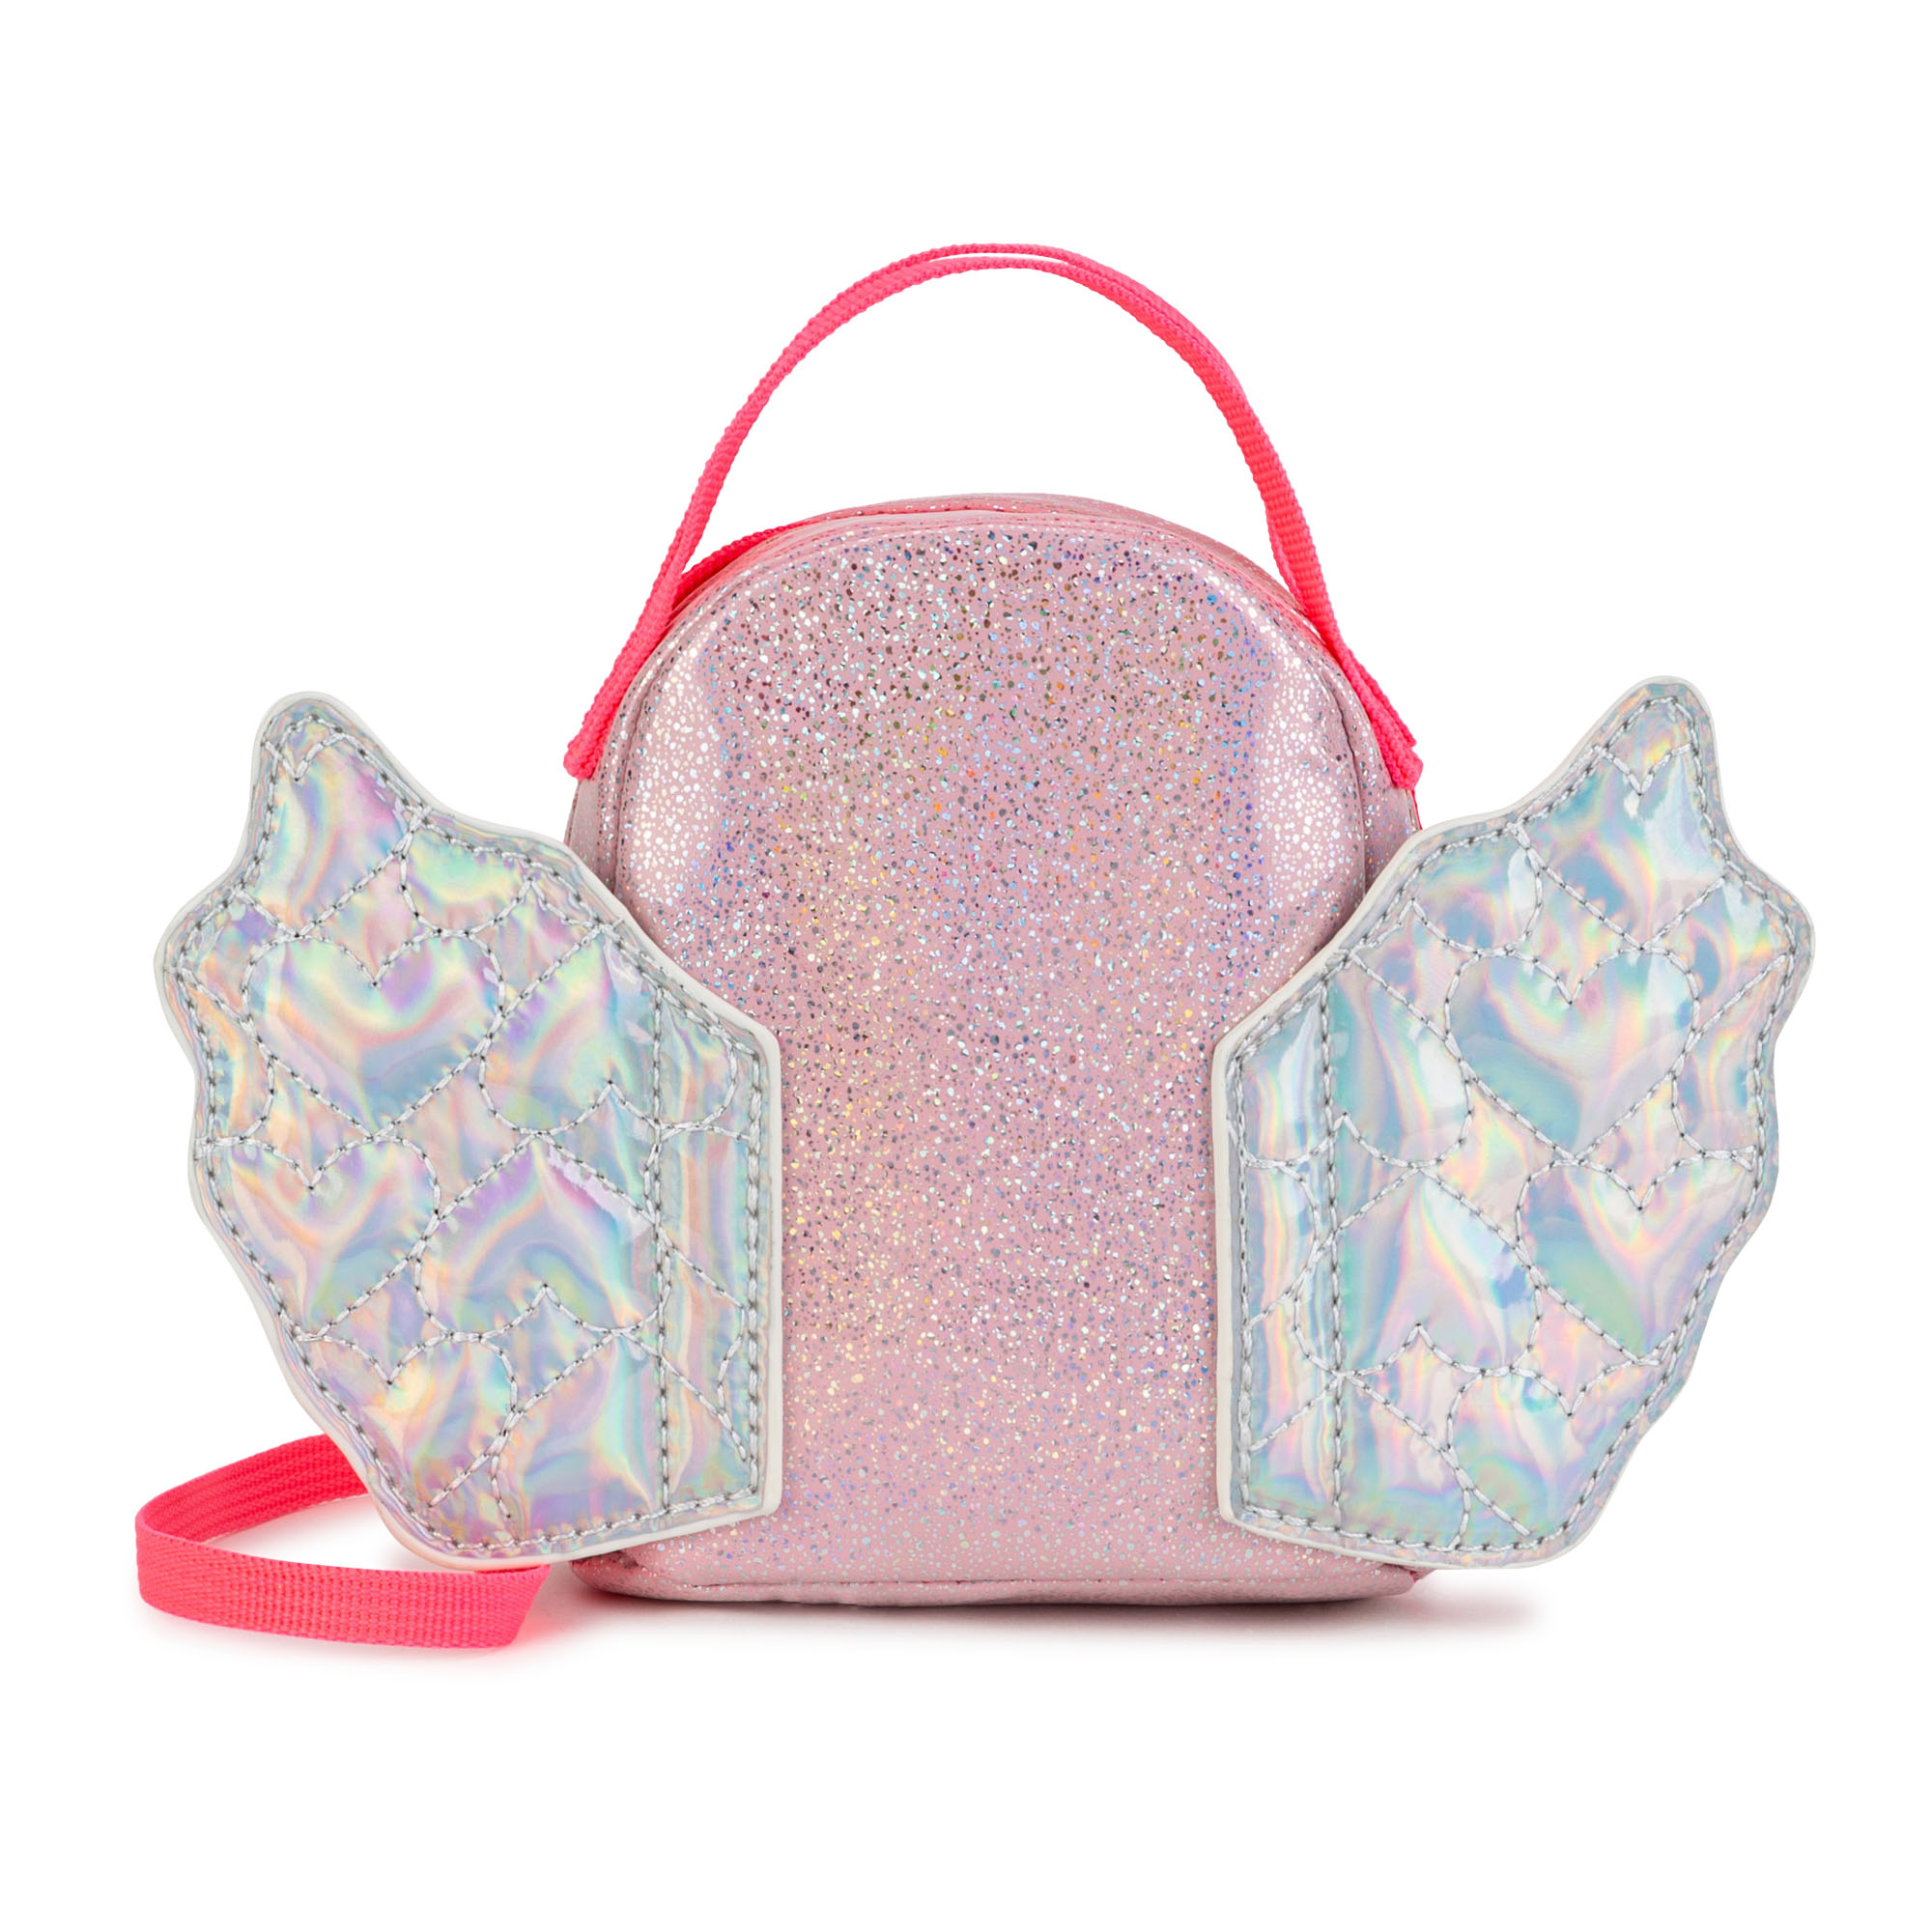 Winged handbag BILLIEBLUSH for GIRL